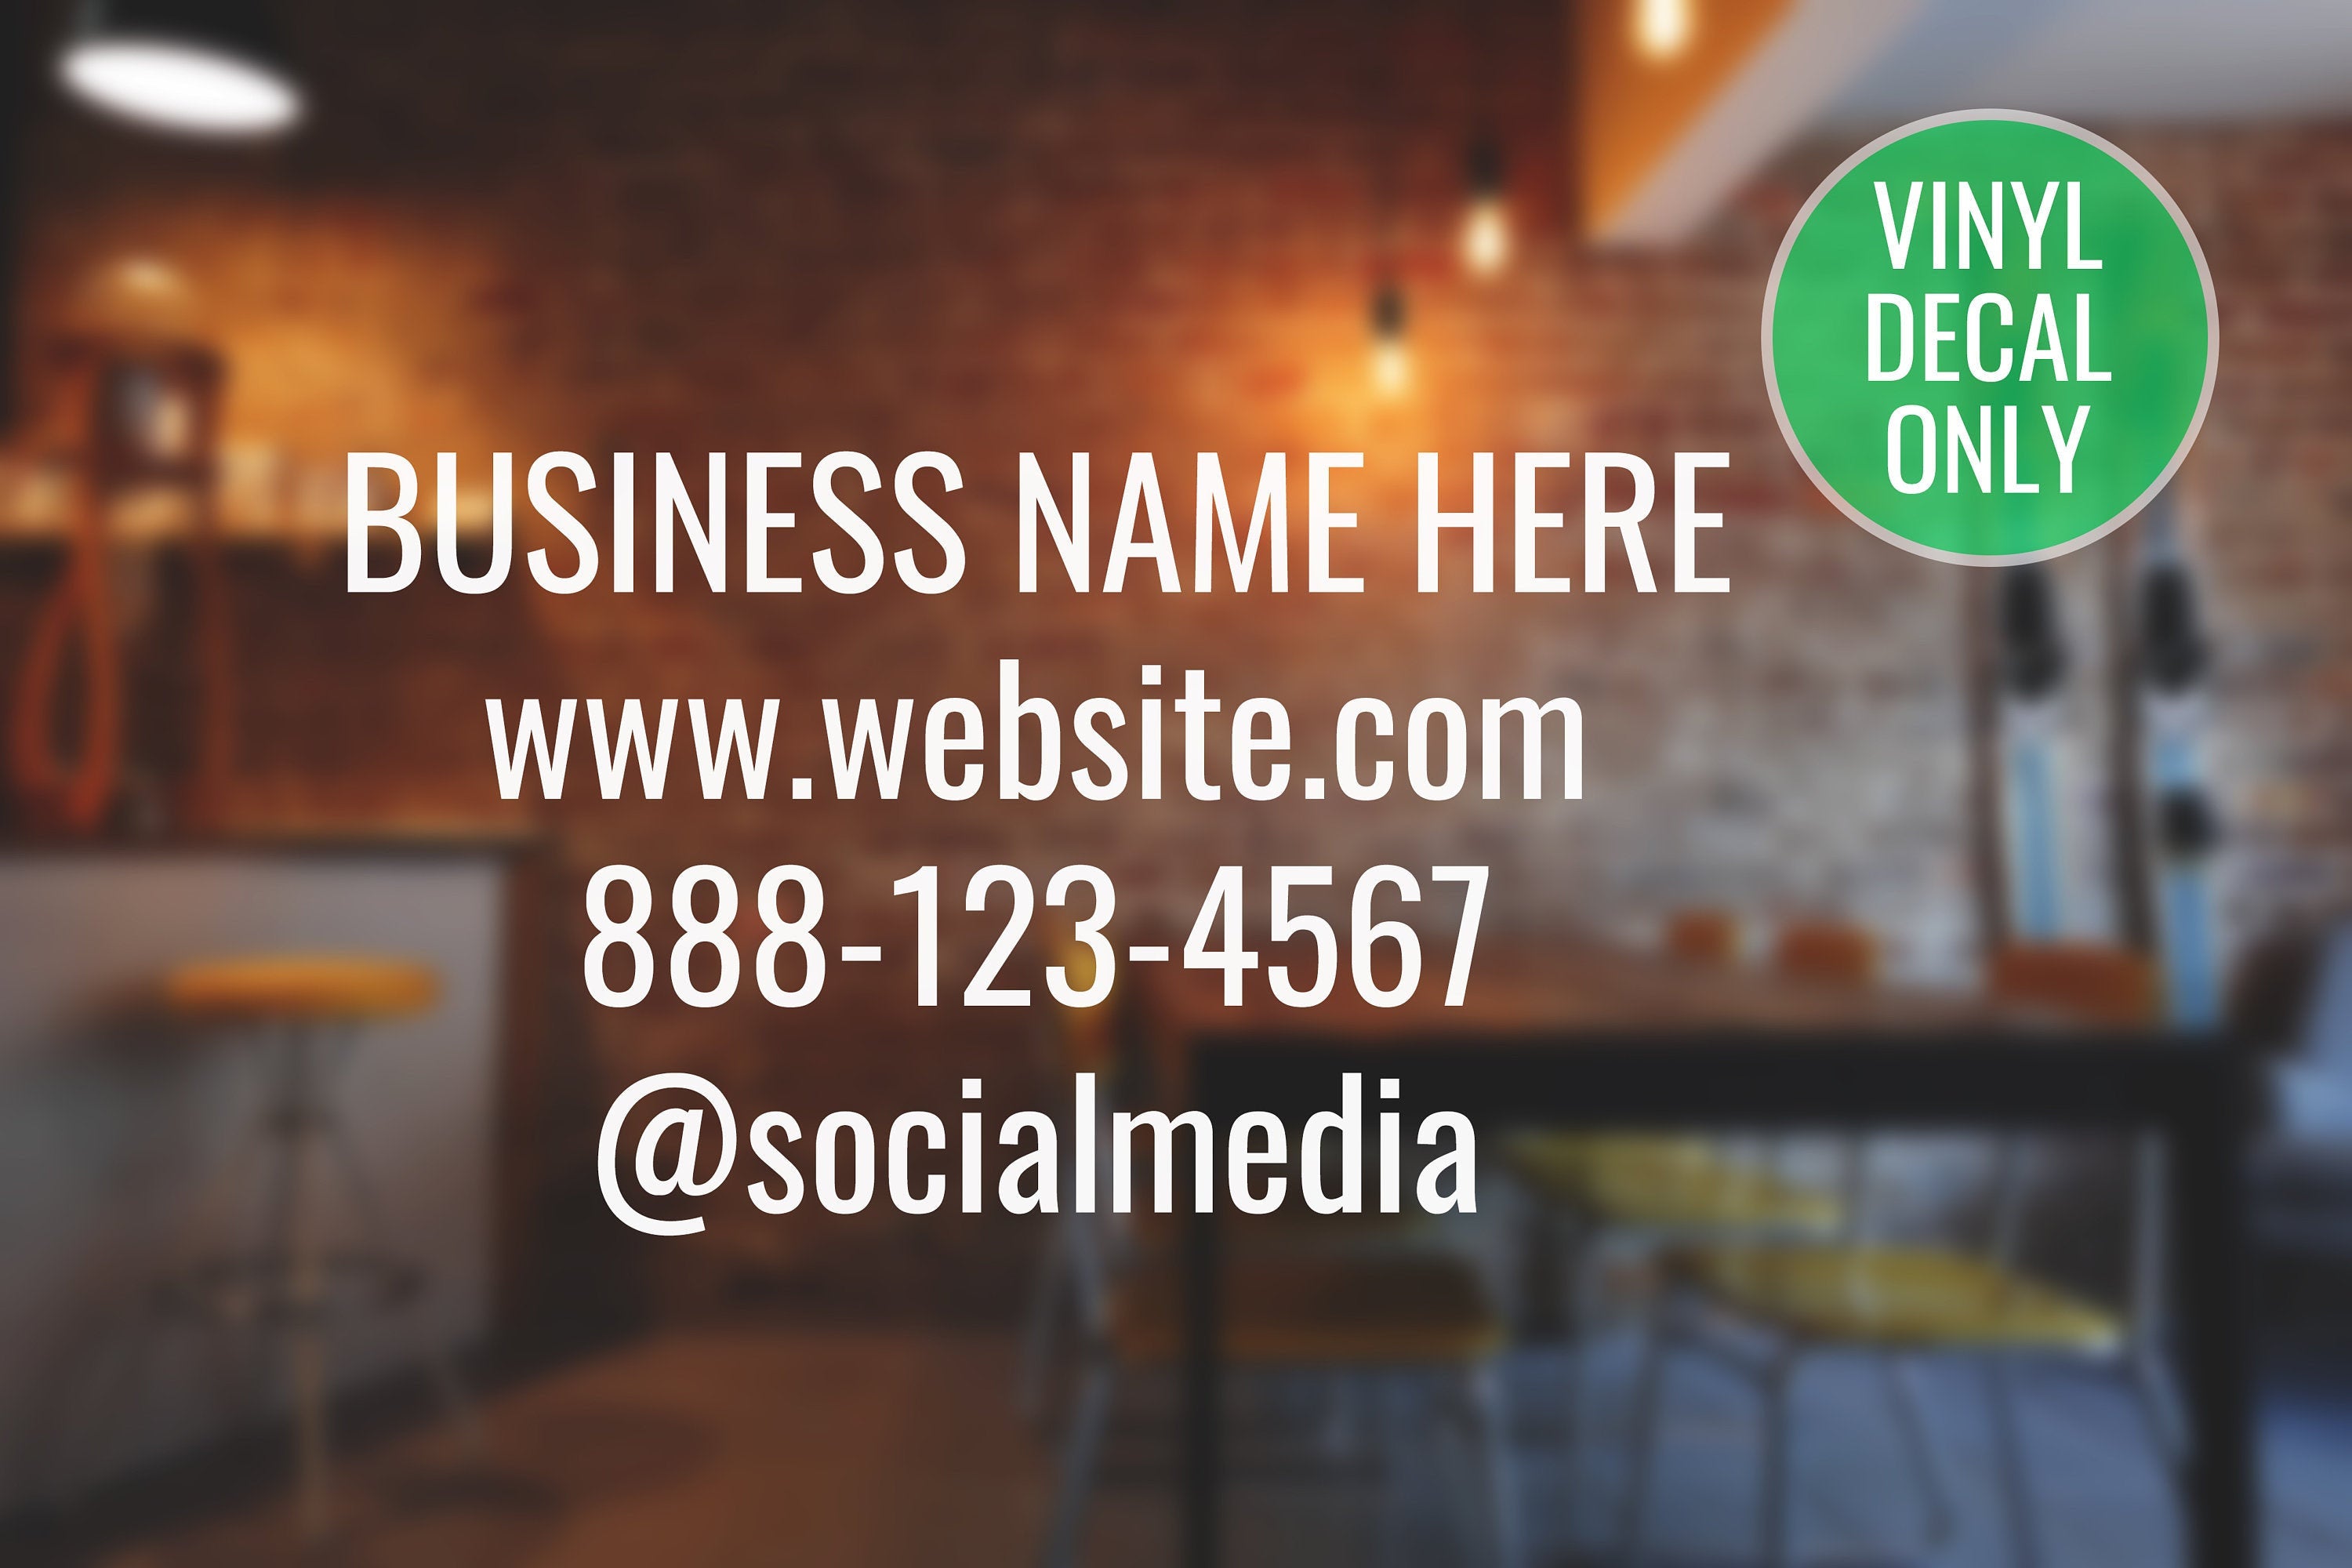 Business Name Decal with Website Address, Phone Number & Social Media Handle - Vinyl Sticker for Storefront, Door, Window, Restaurants, Car!